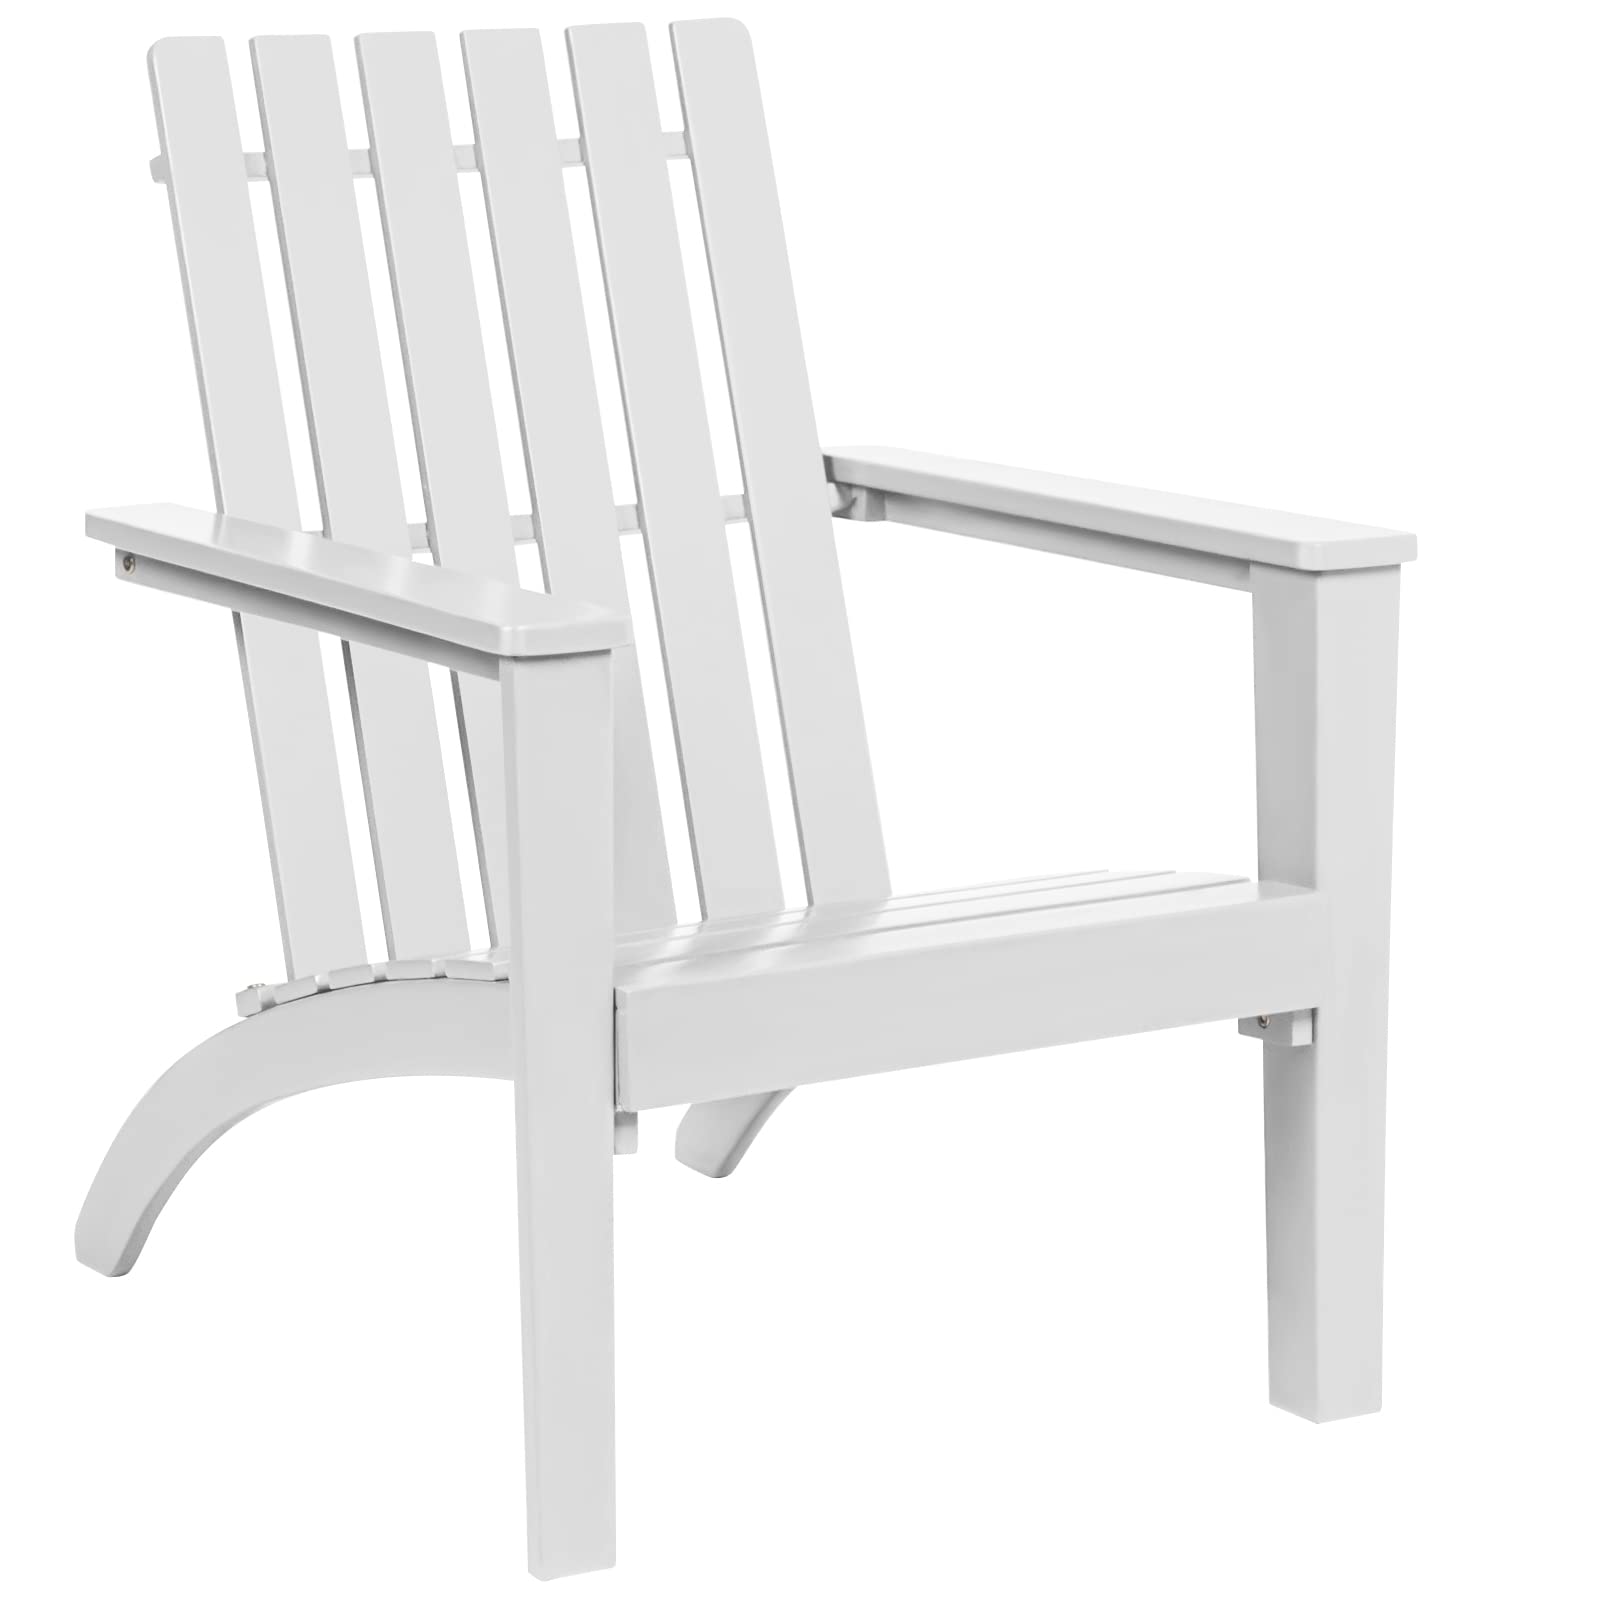 Giantex Wooden Adirondack Chair W/Ergonomic Design Outdoor Chair for Yard